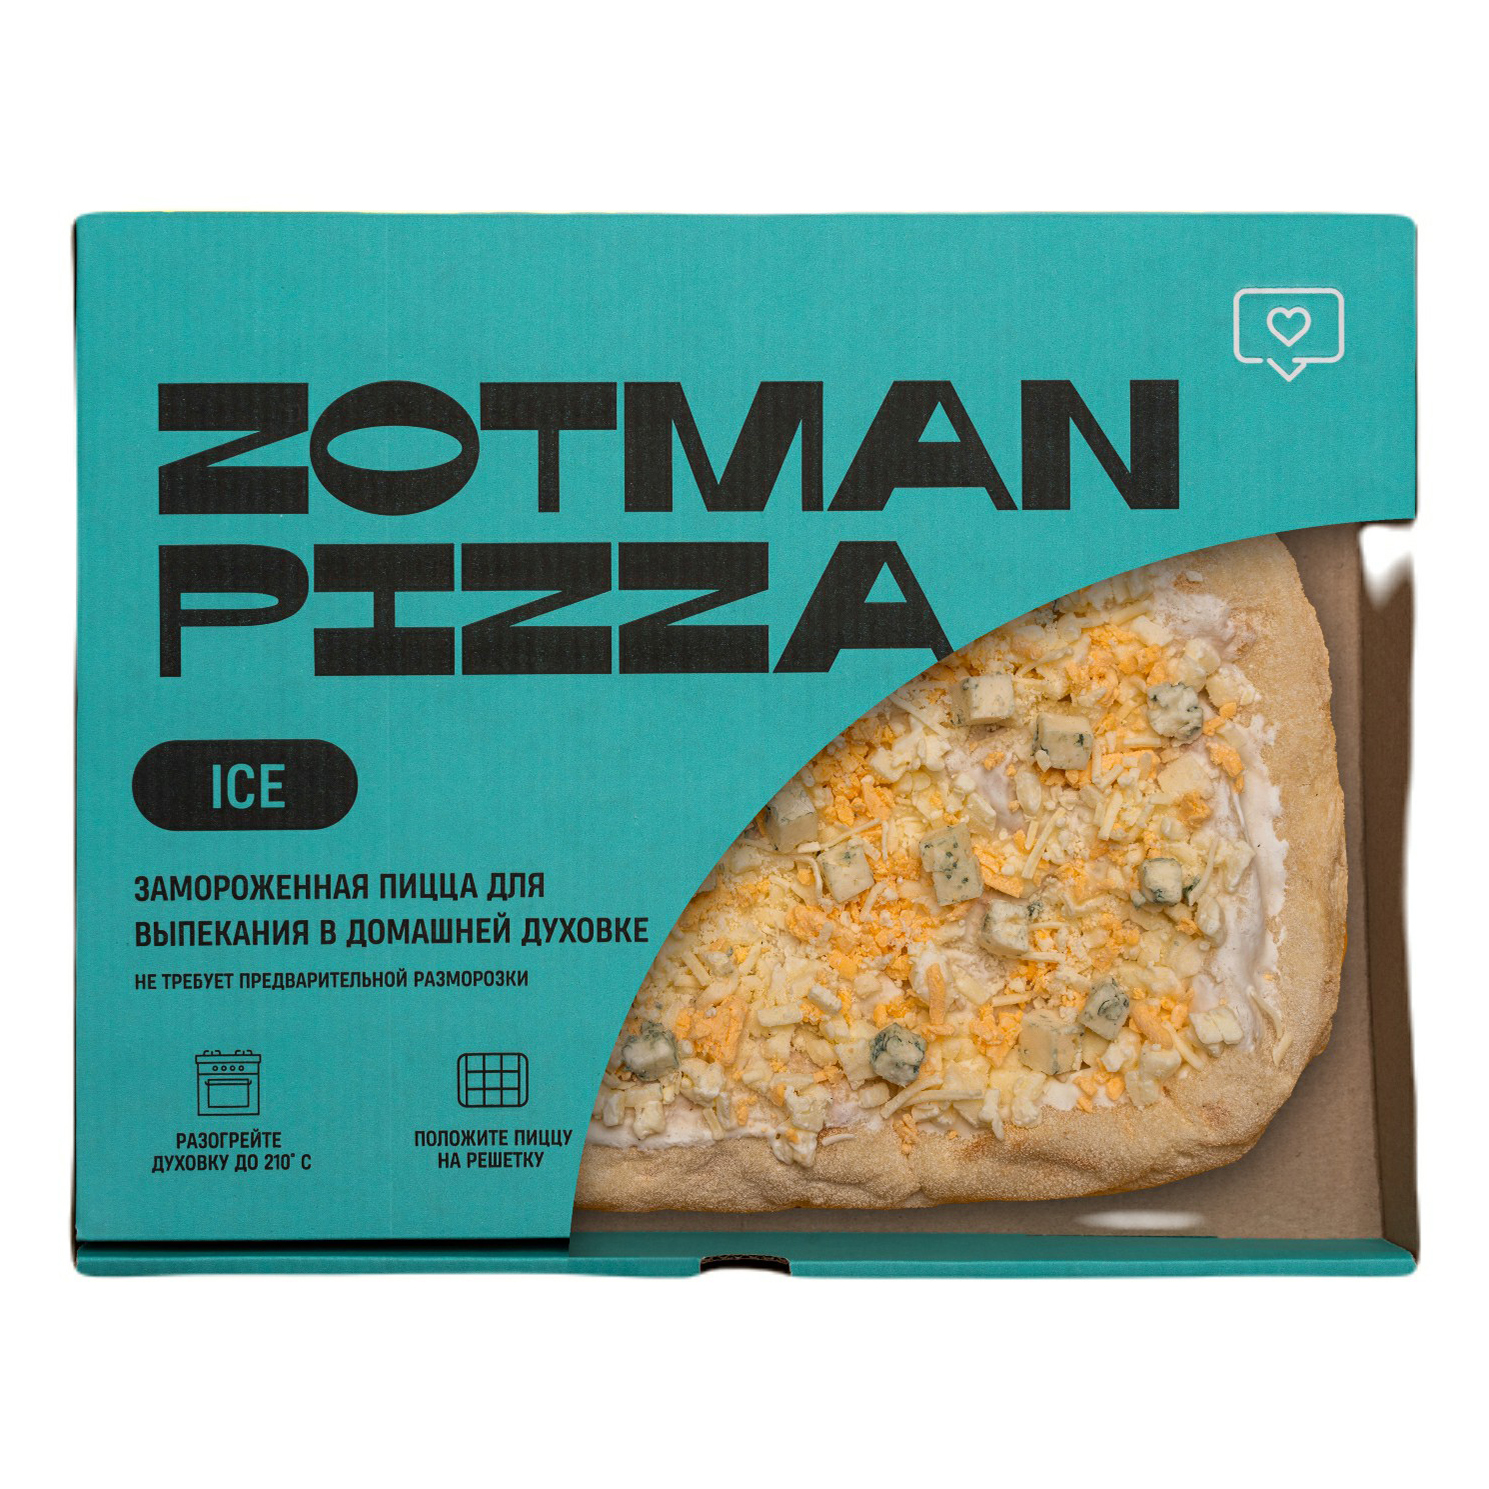 

Пицца Zotman Четыре сыра замороженная 290 г